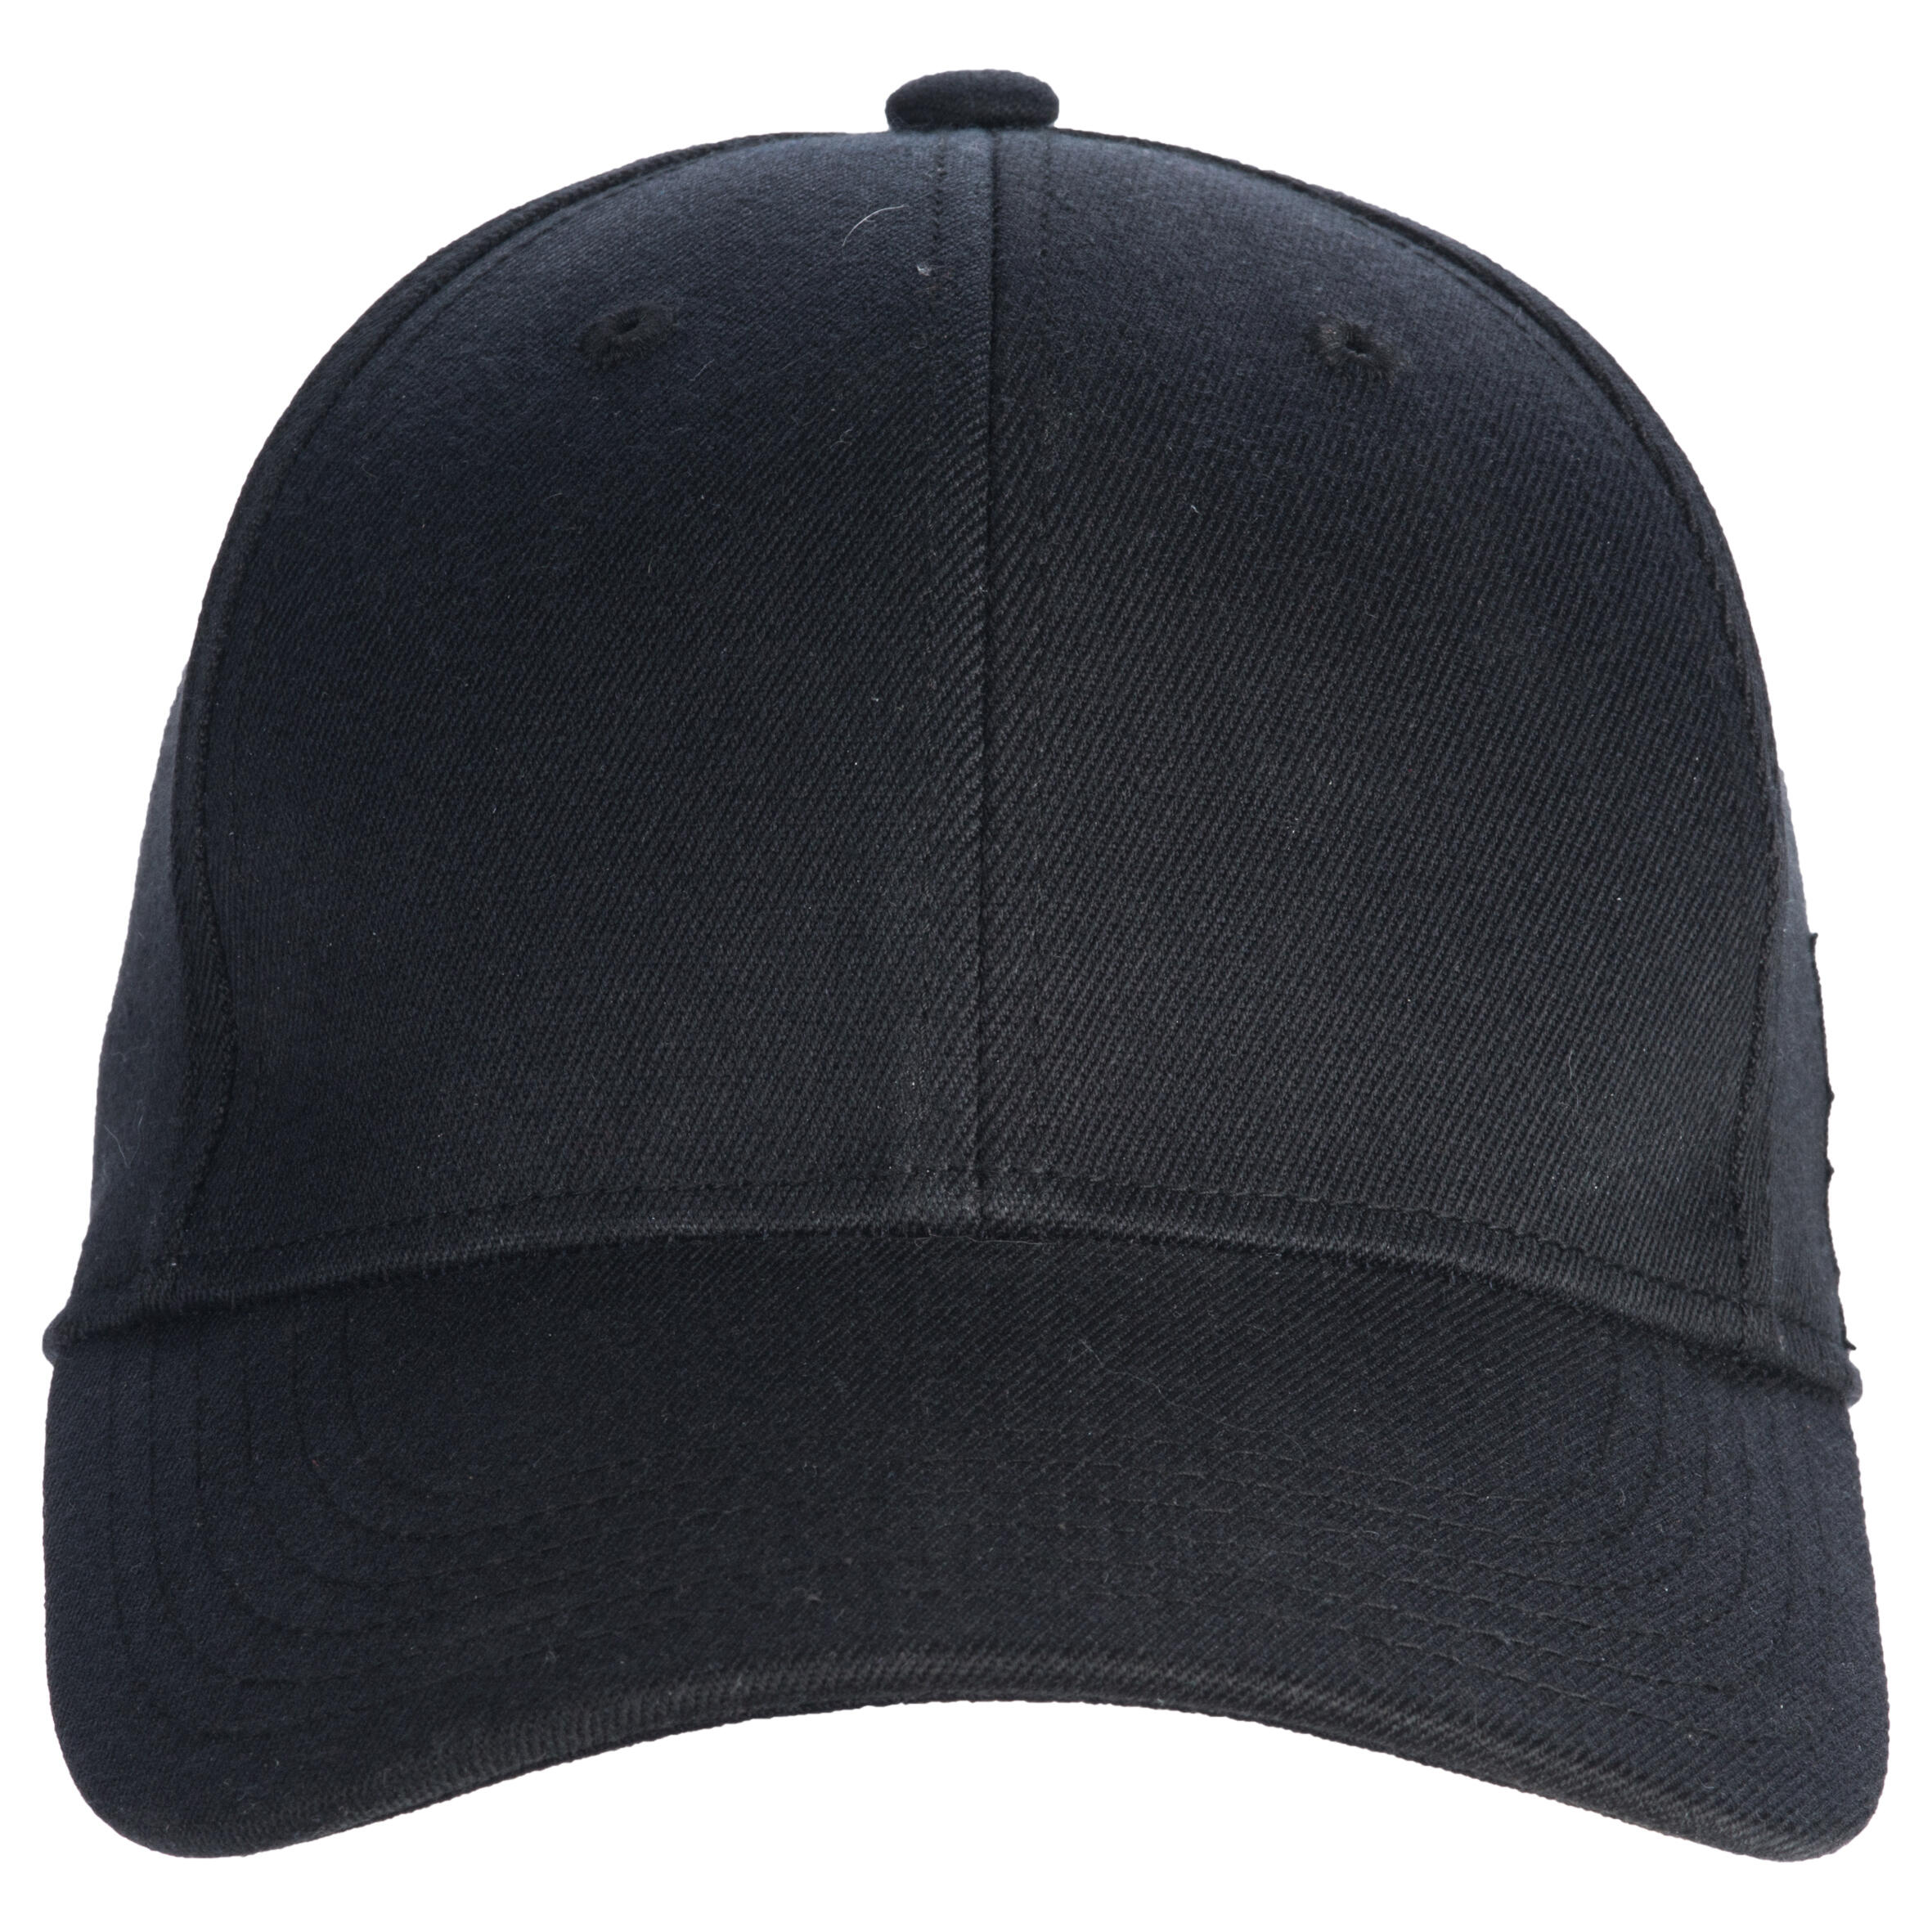 all black baseball hat